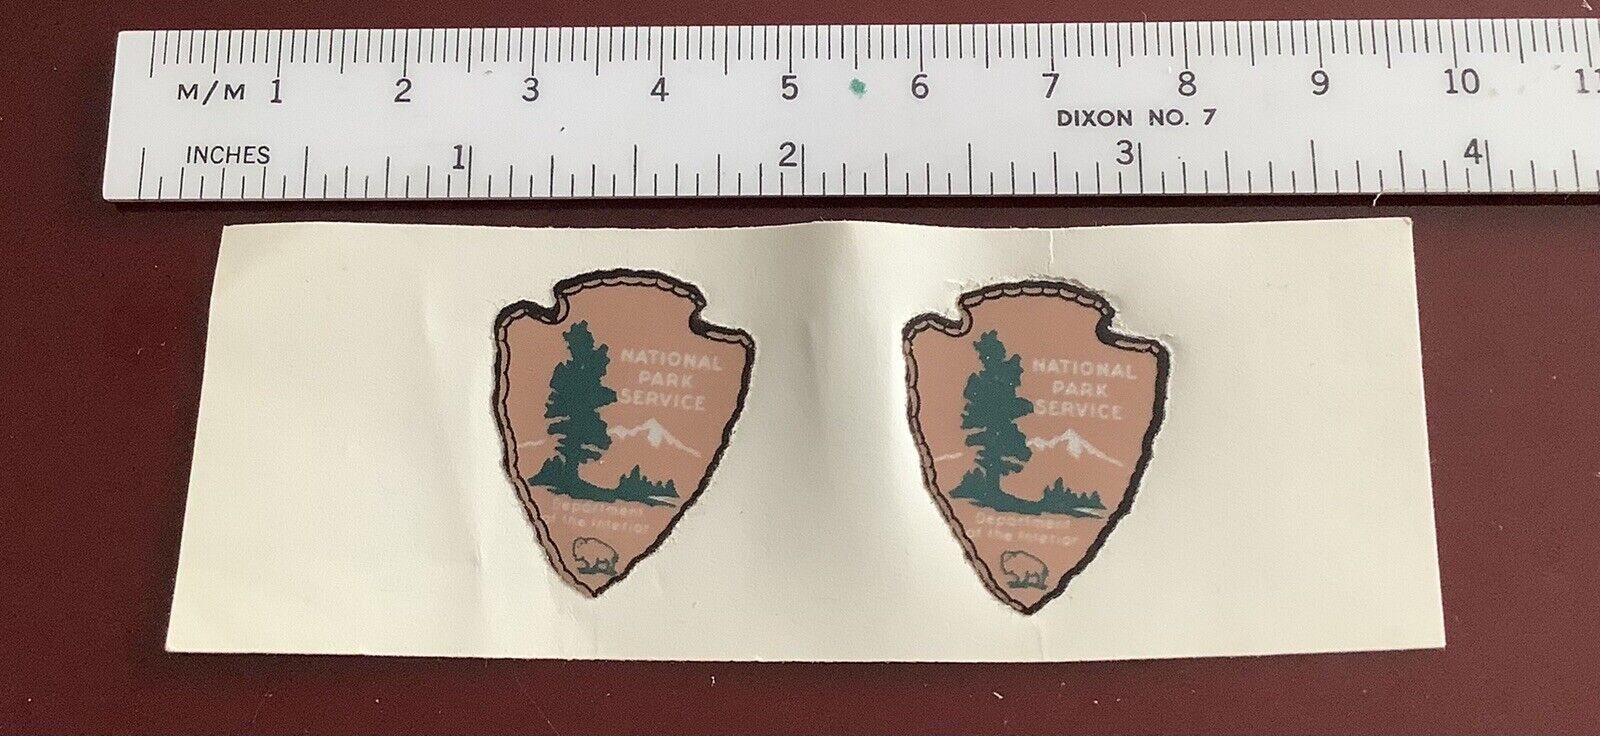 Official National Park Service Sticker Decals